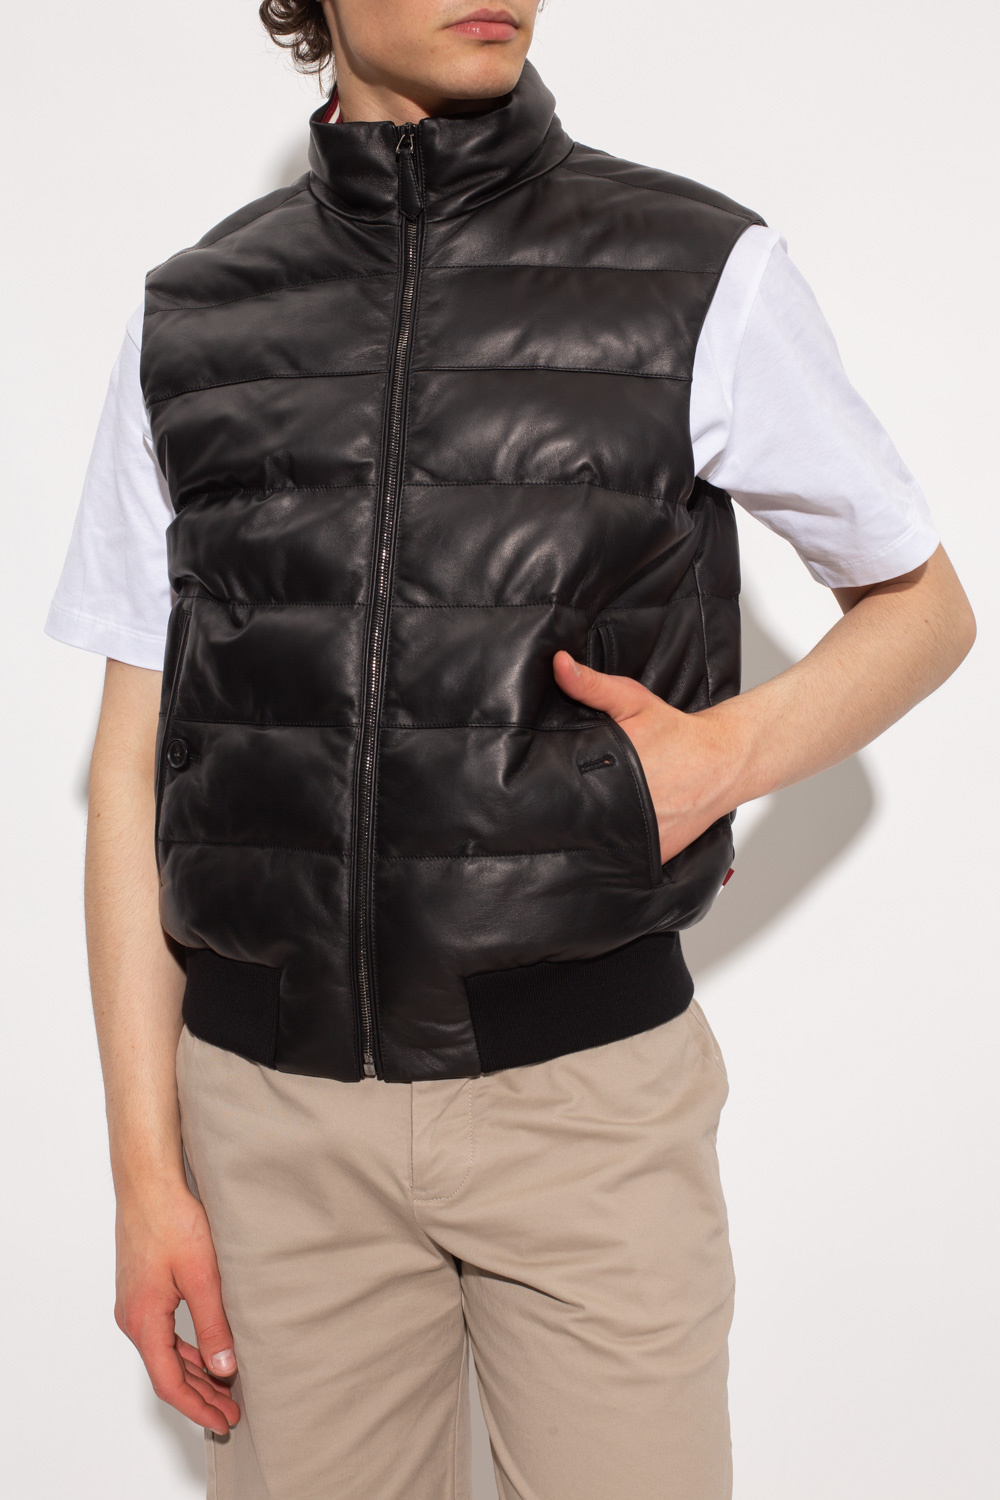 monogram-print padded jacket, Bally